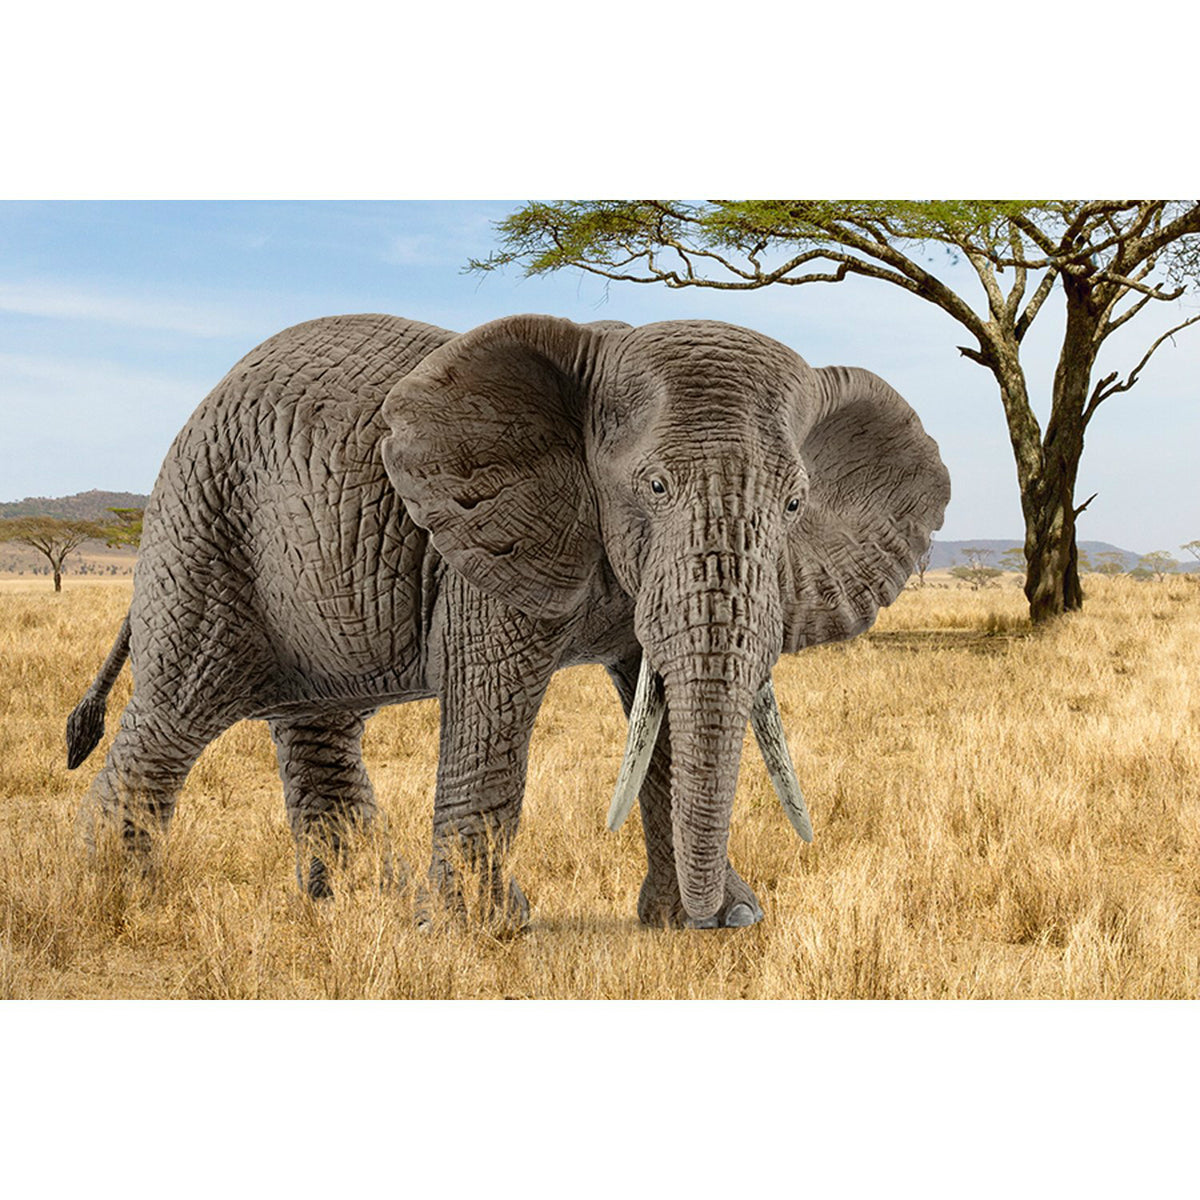 Schleich 14761 Figurine Female African Elephant Toy